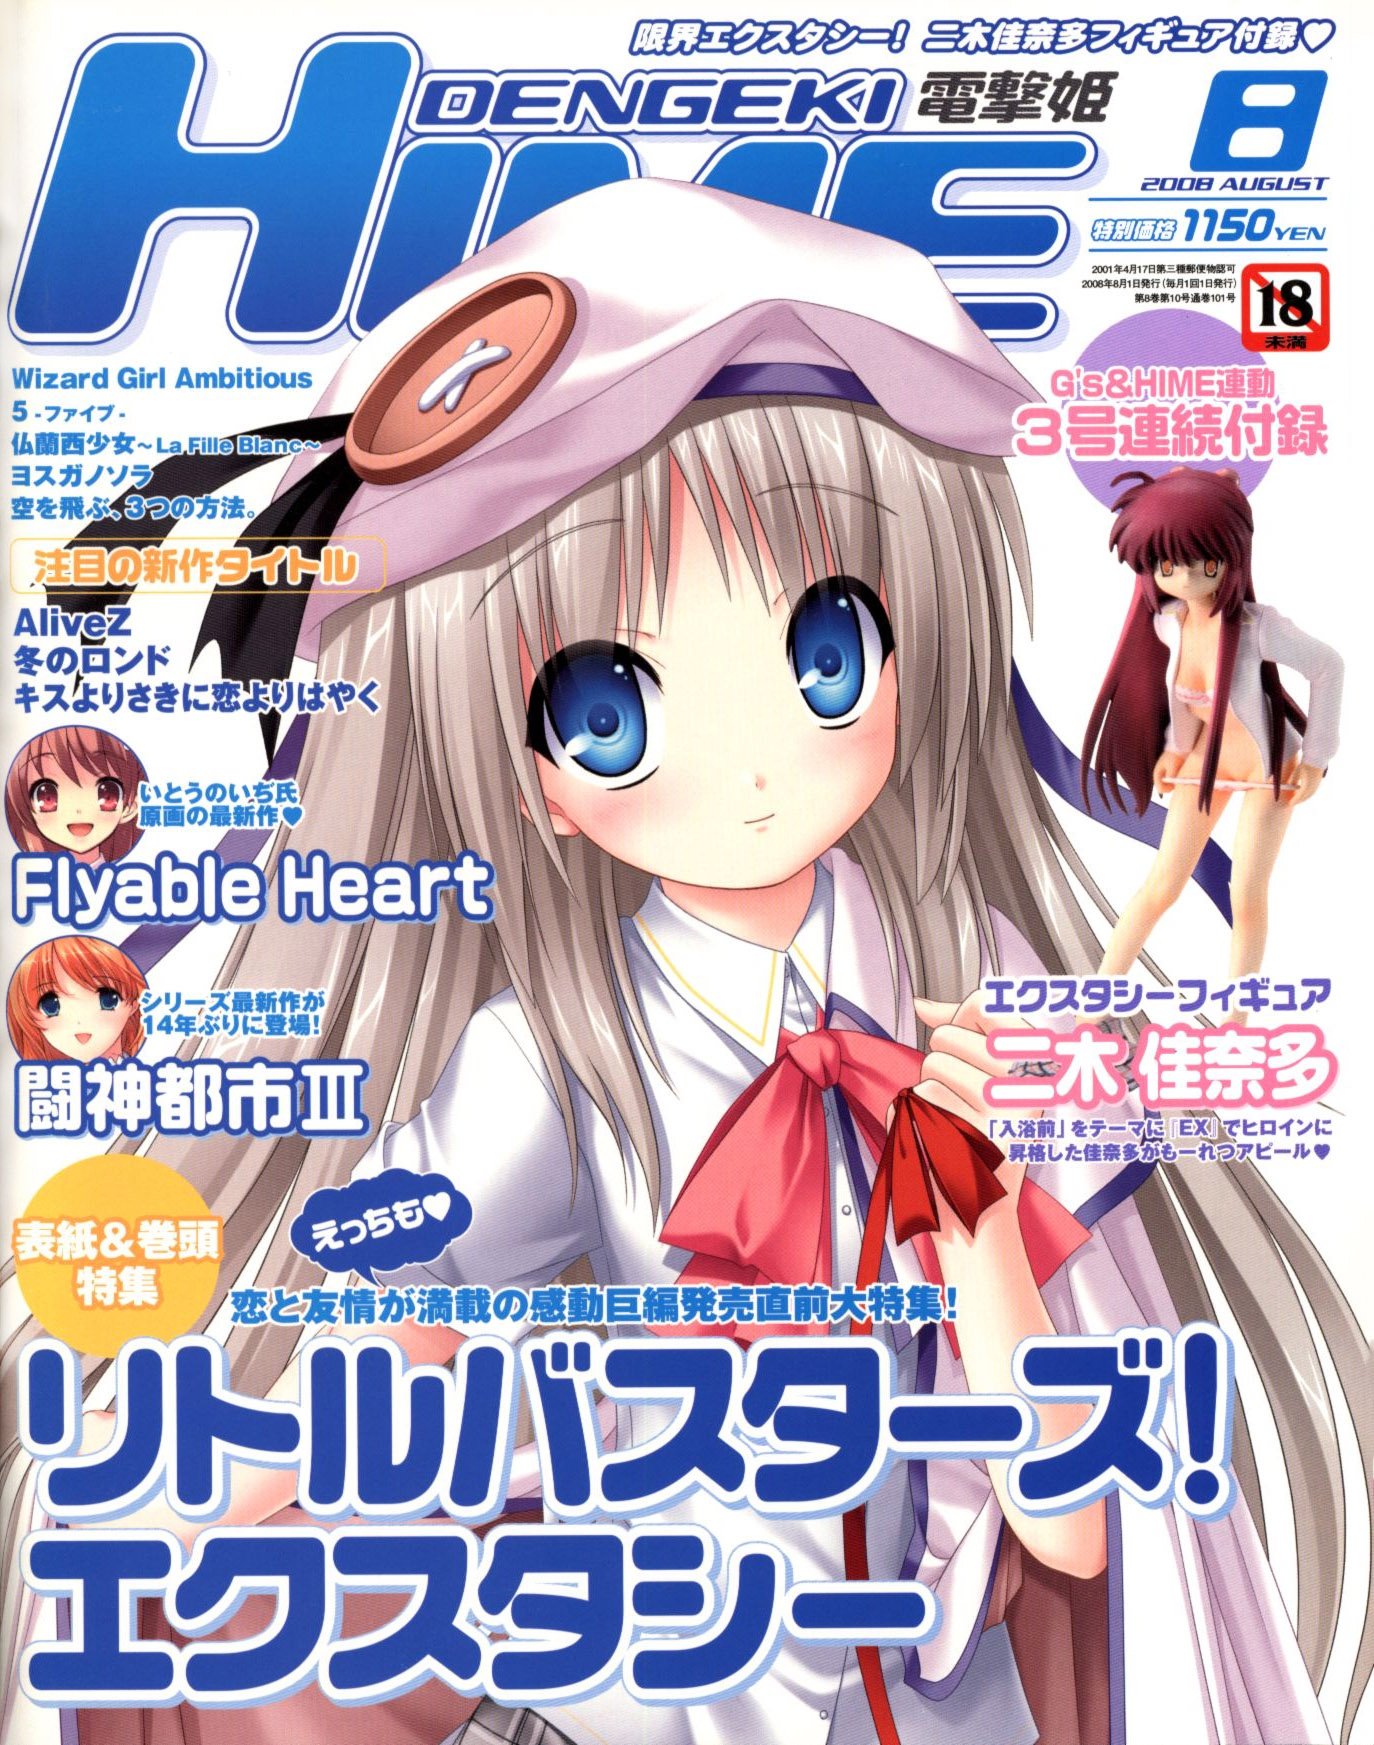 Dengeki Hime Issue 101 (August 2008)